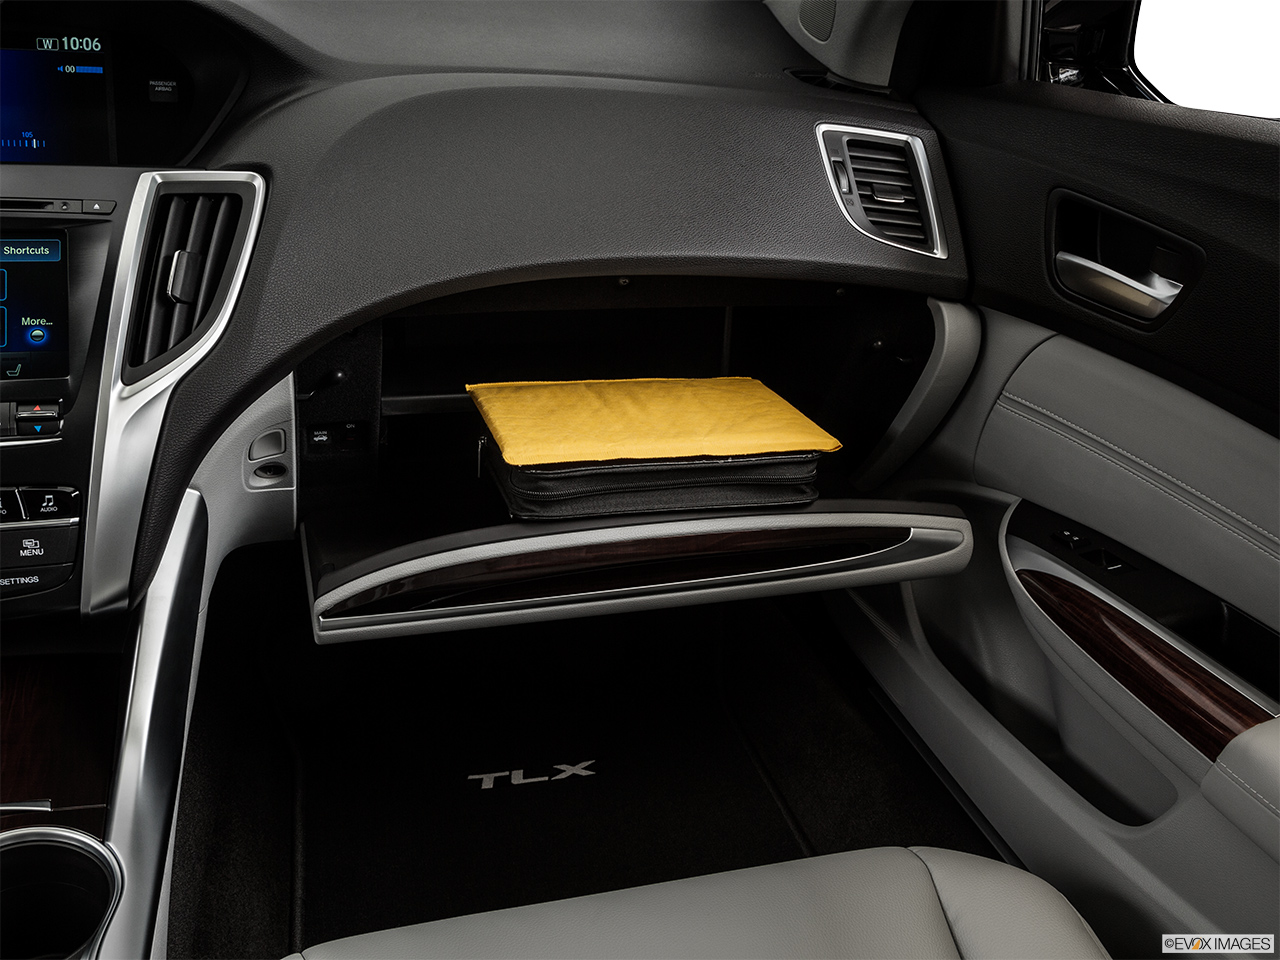 2015 Acura TLX 3.5 V-6 9-AT P-AWS Glove box open. 